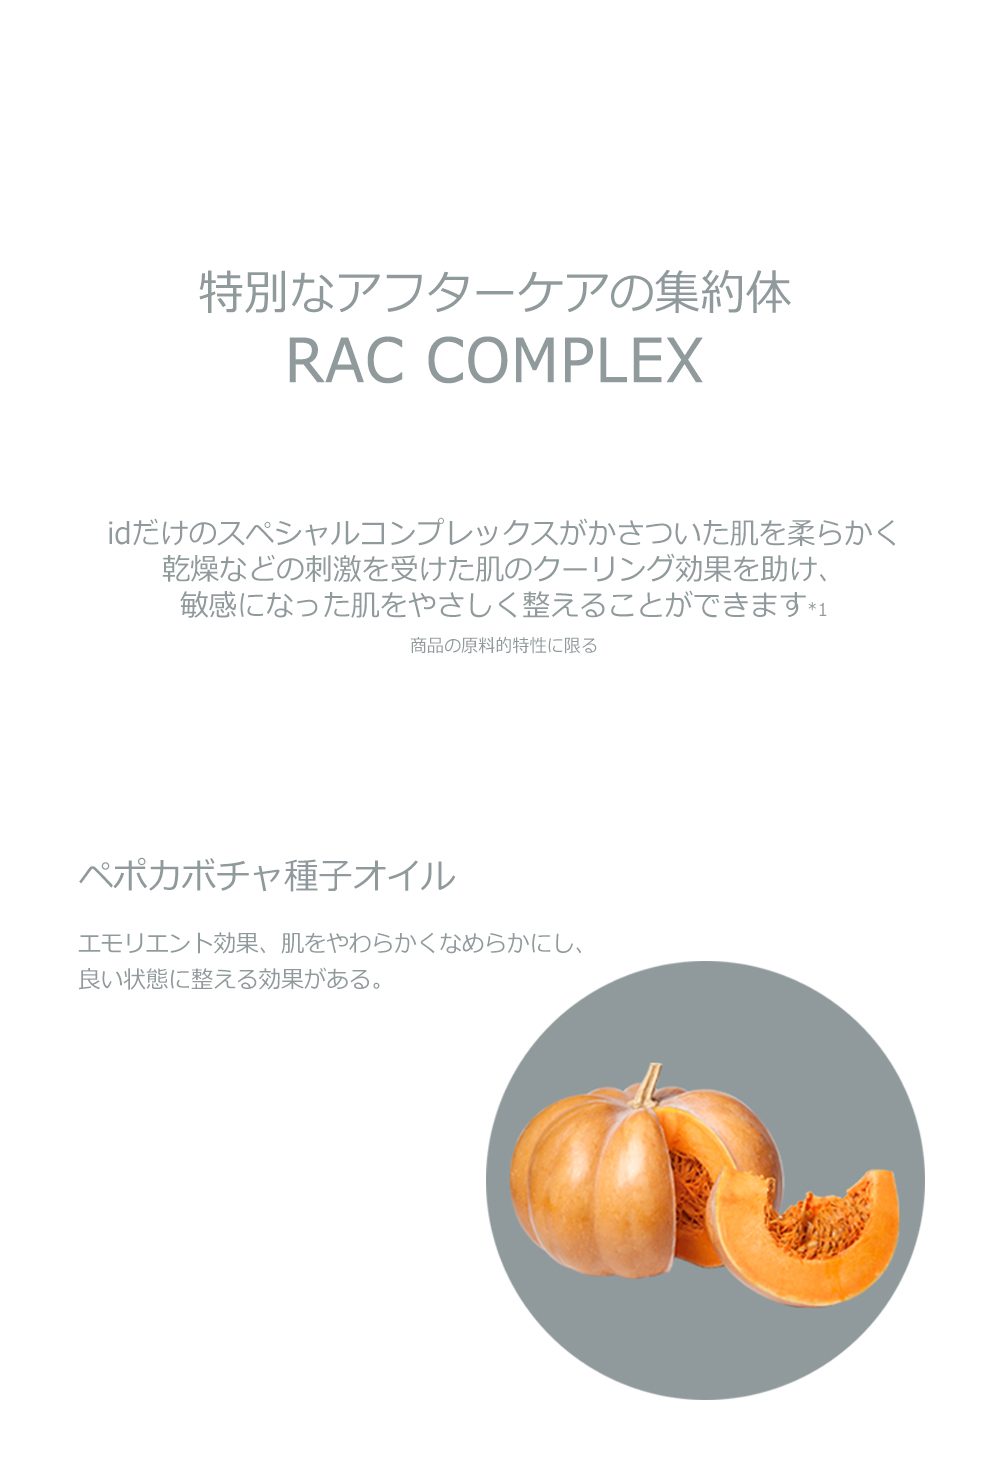 idplacosmetics_RAC_raccomplex01